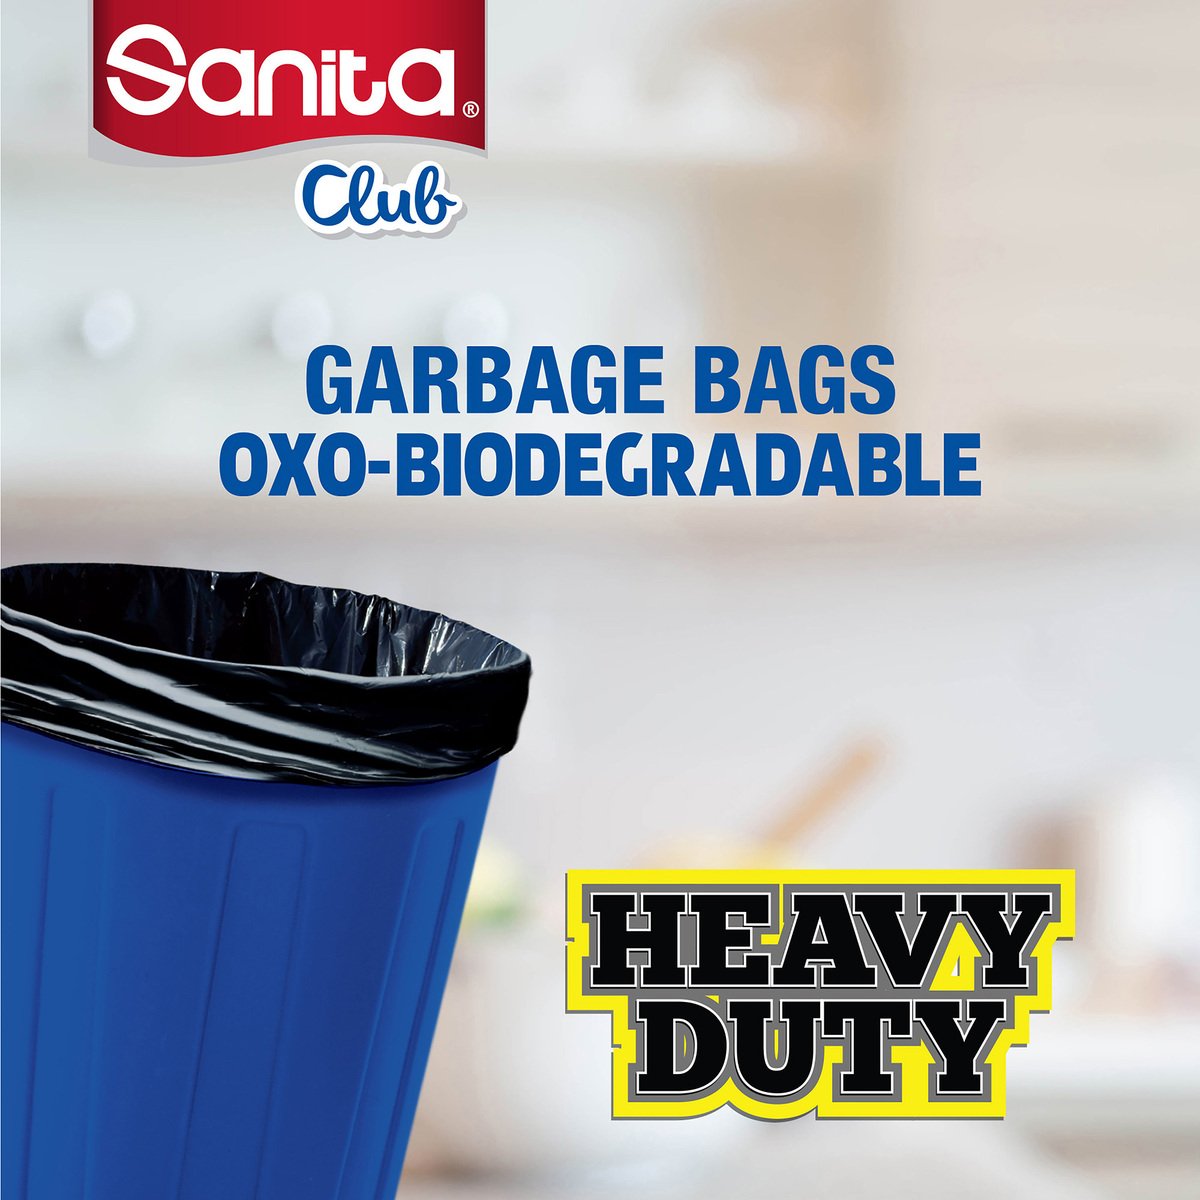 Sanita Club Garbage Bags Heavy Duty Large 50 Gallons Size 76 x 95cm 45pcs